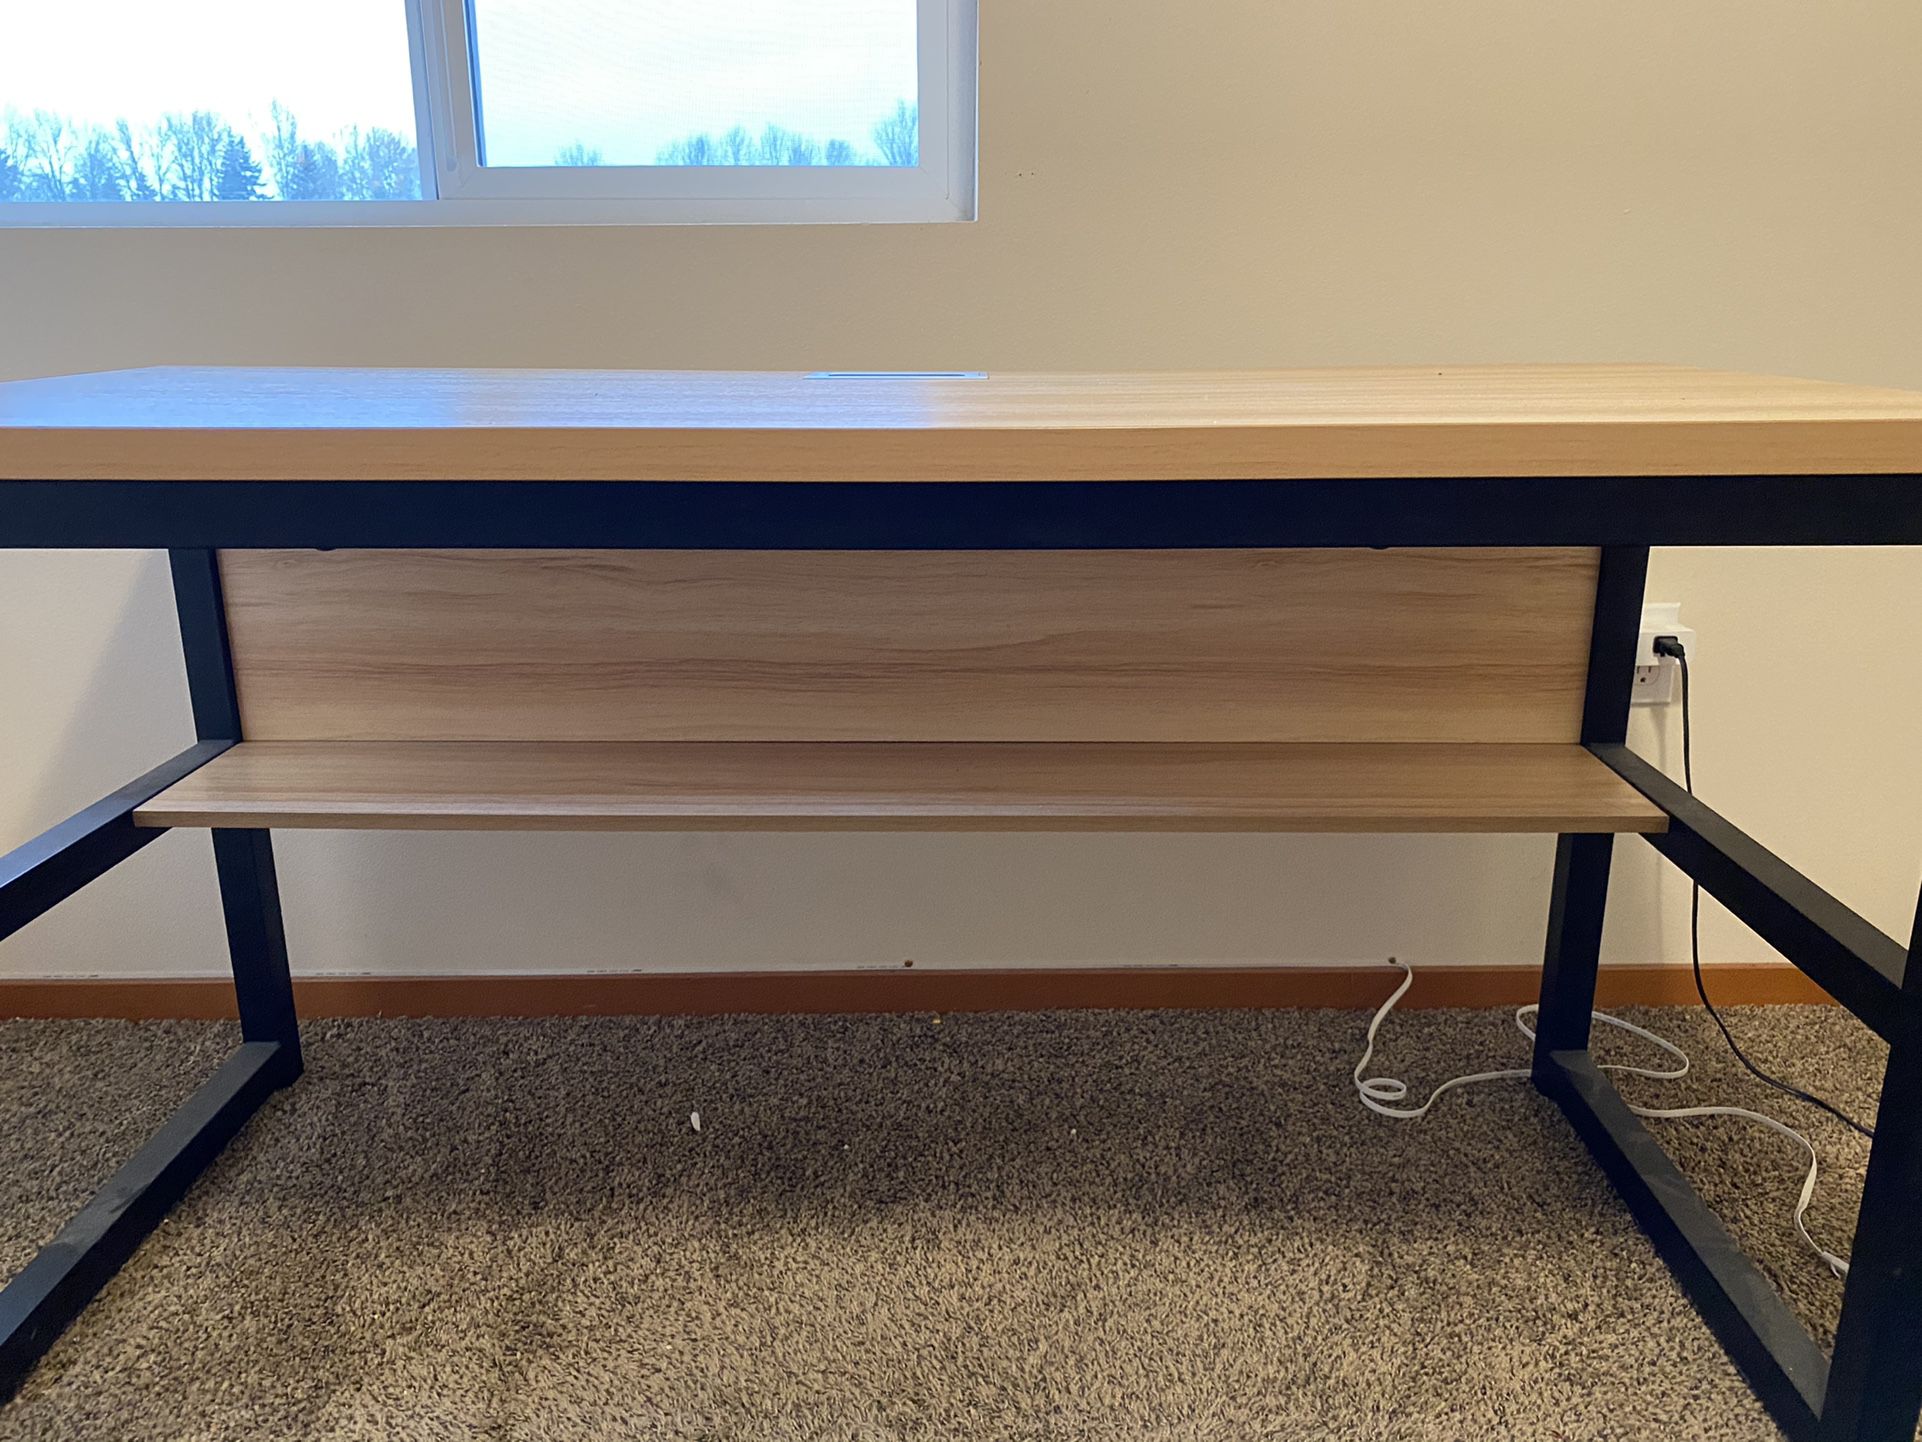 Large Desk with Shelf Below